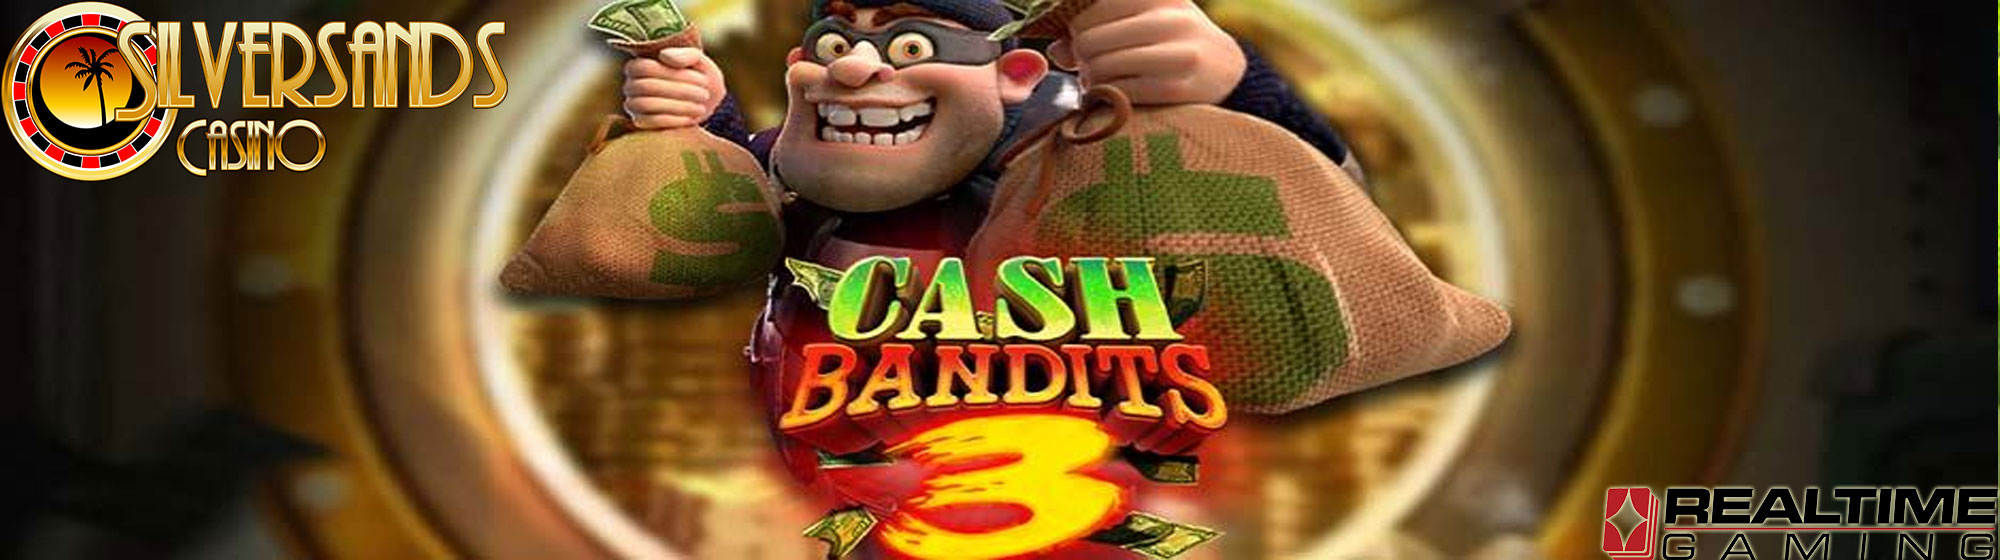 limitless casino no deposit bonus bandits 3